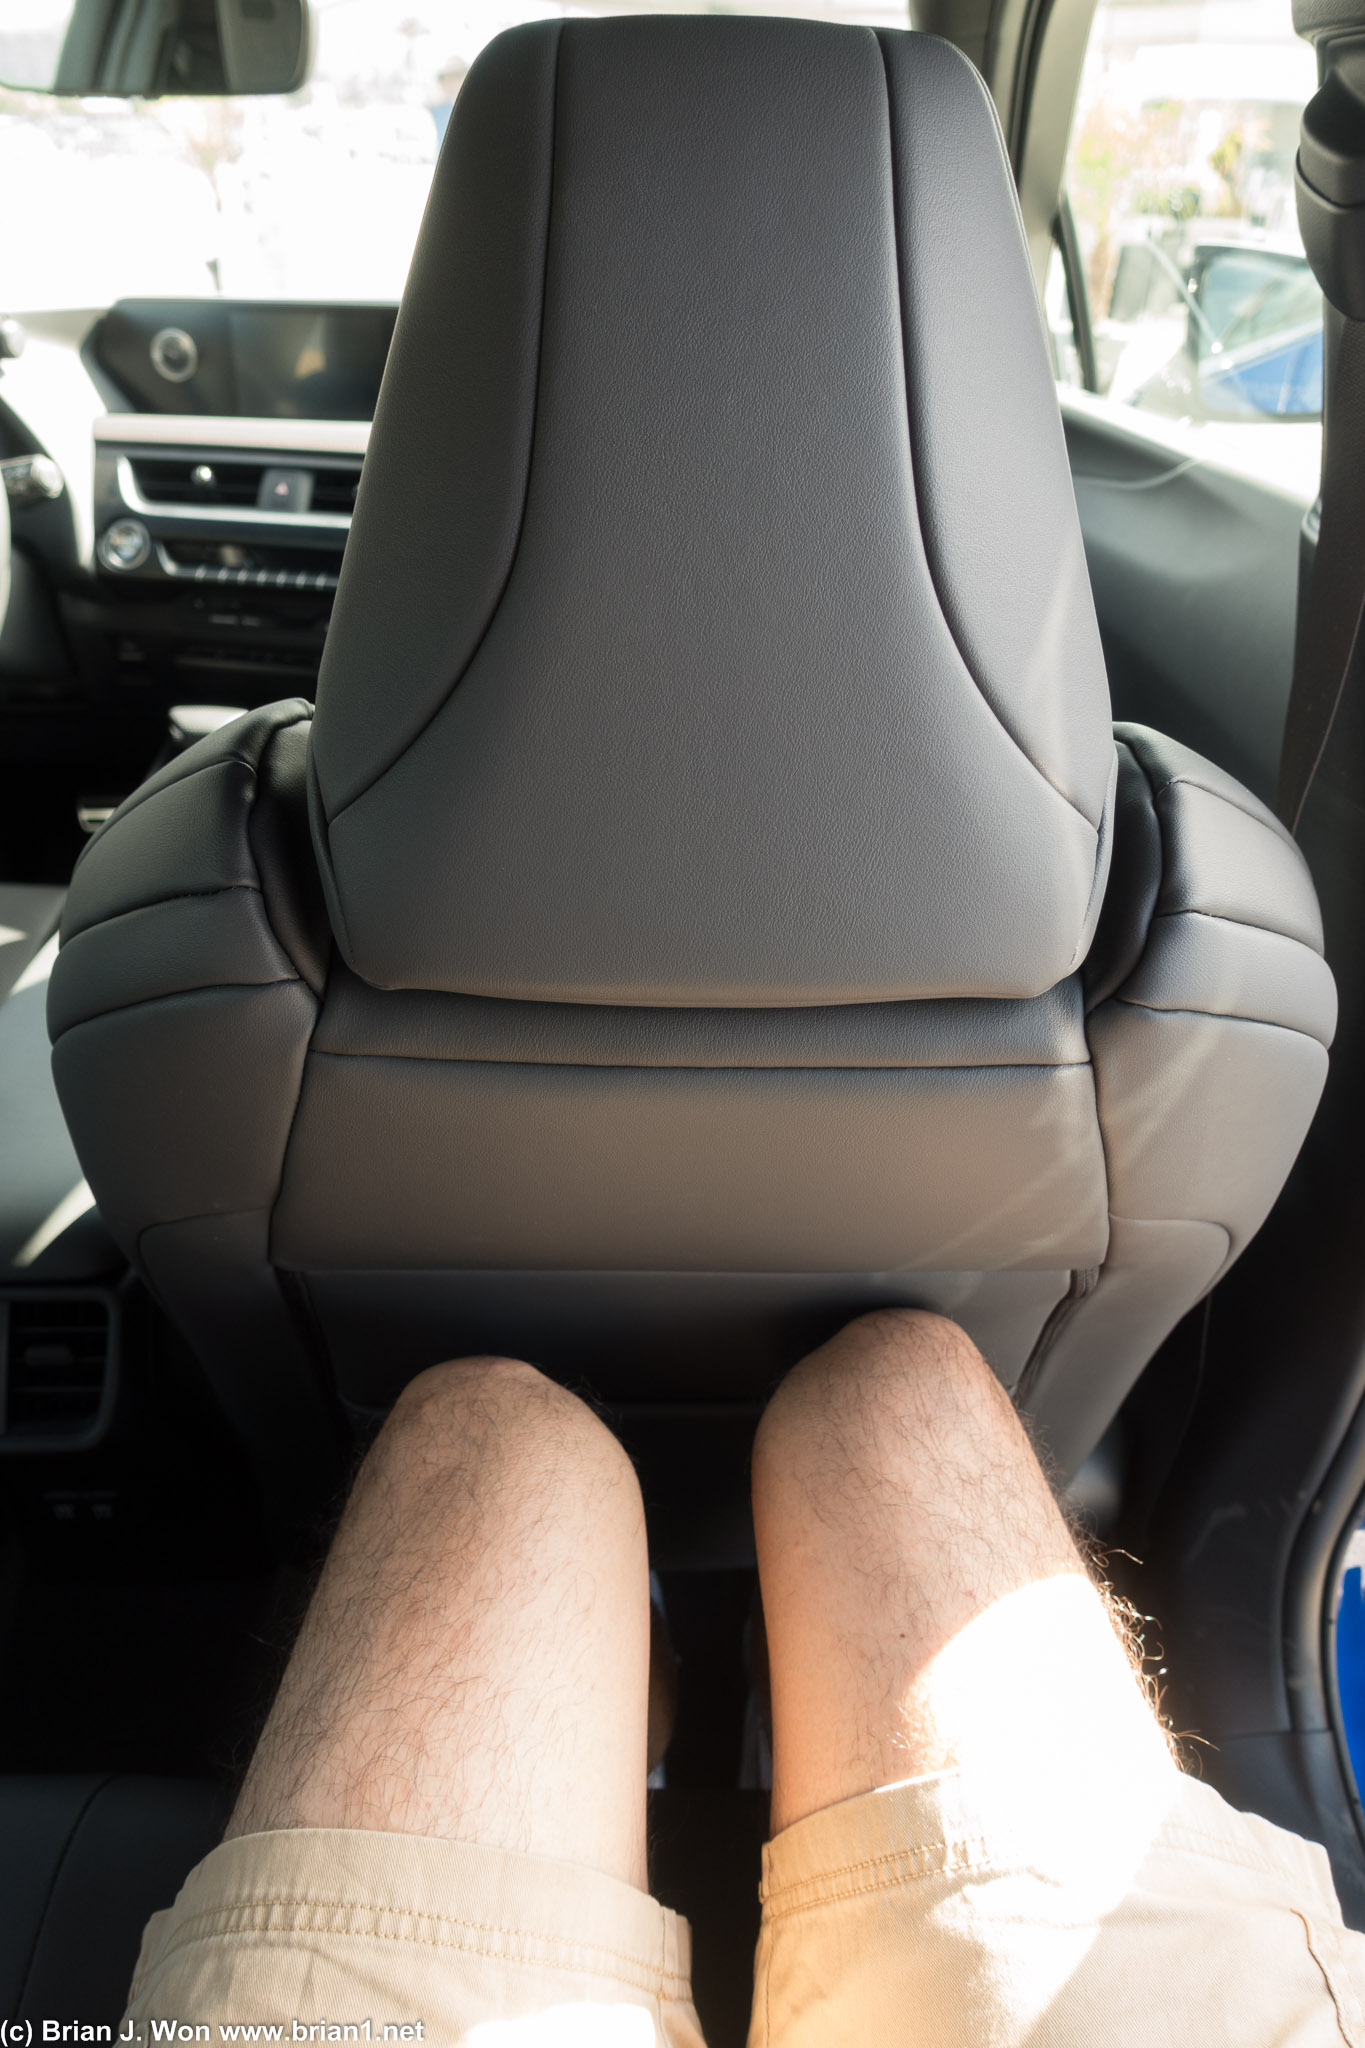 Lexus UX200 backseat is tight.